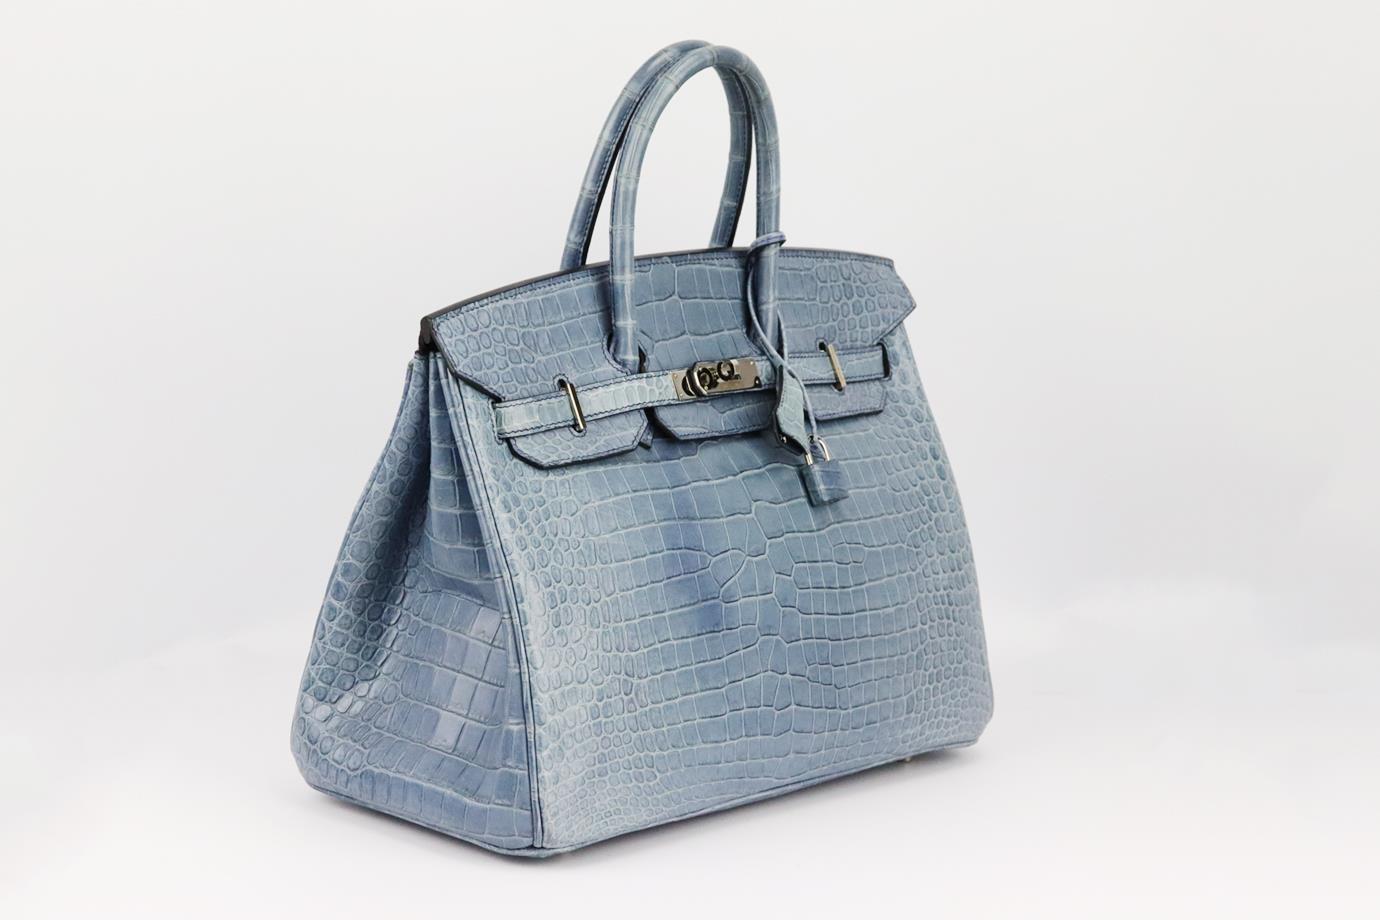 Hermès 2010 Birkin 35cm Matte Crocodile Porosus Leather Bag For Sale 1